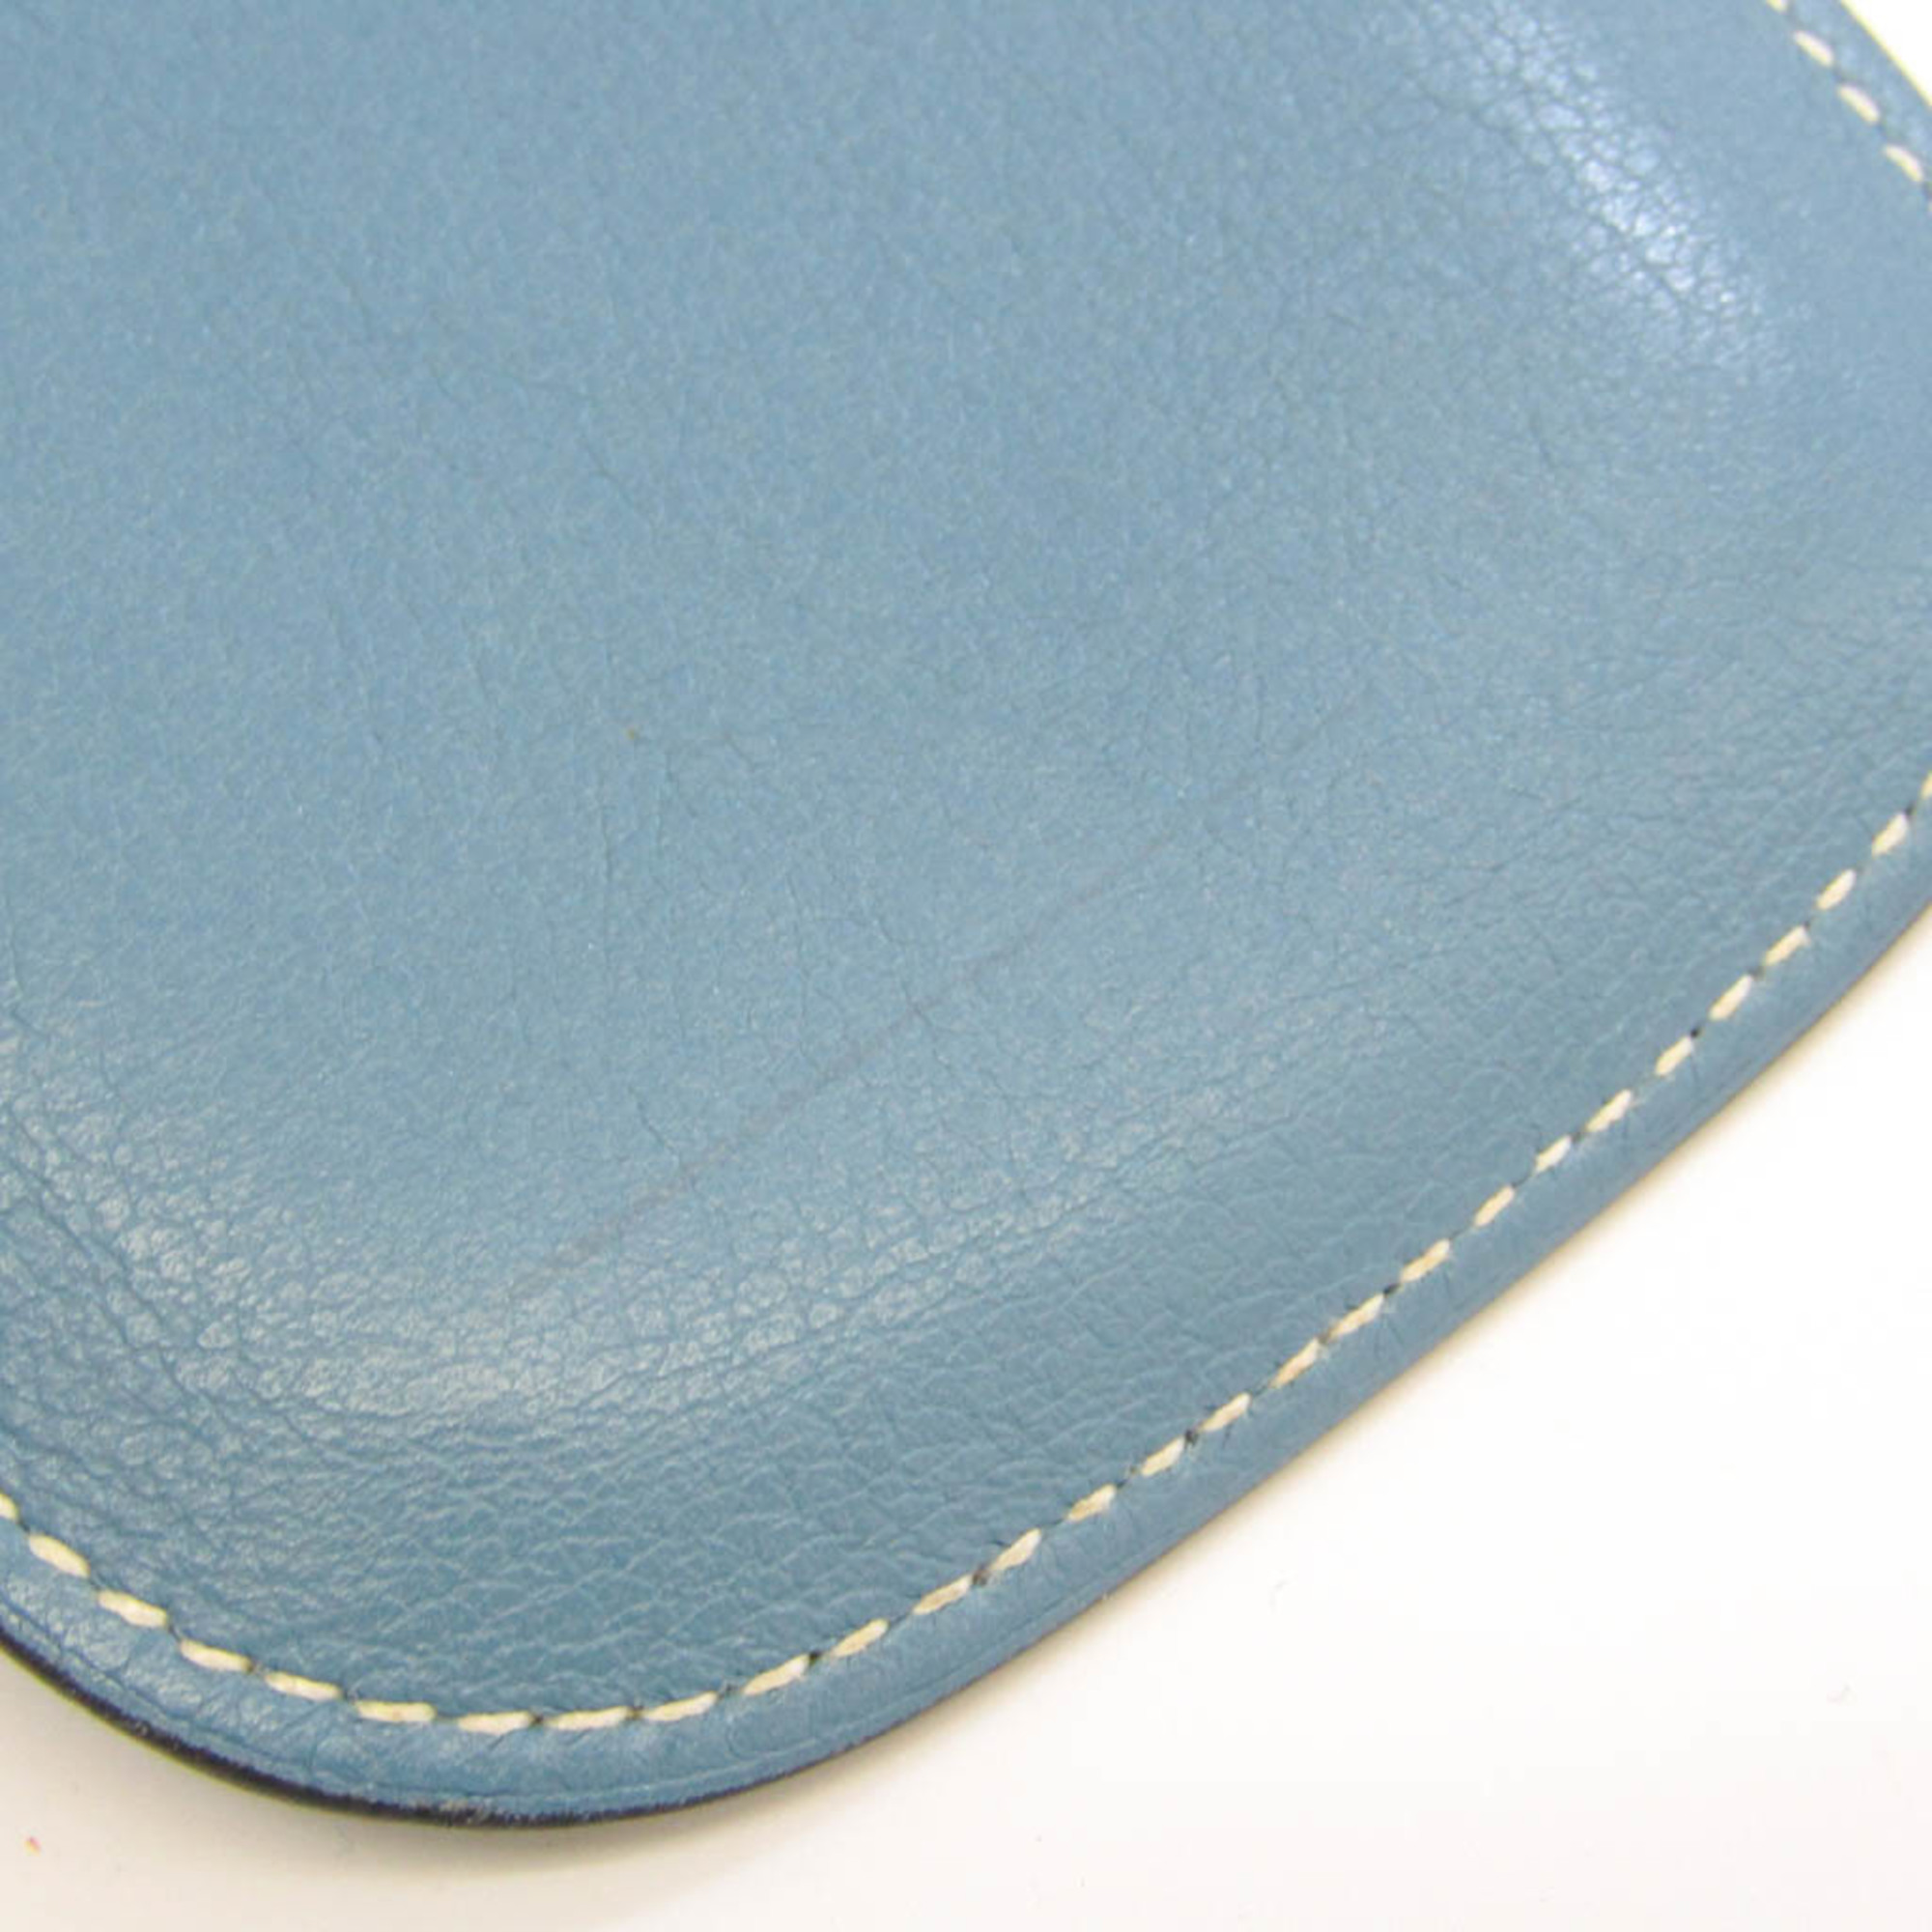 Hermes Leather Phone Pouch/sleeve Blue Jean BLACKBERRY blackberry case